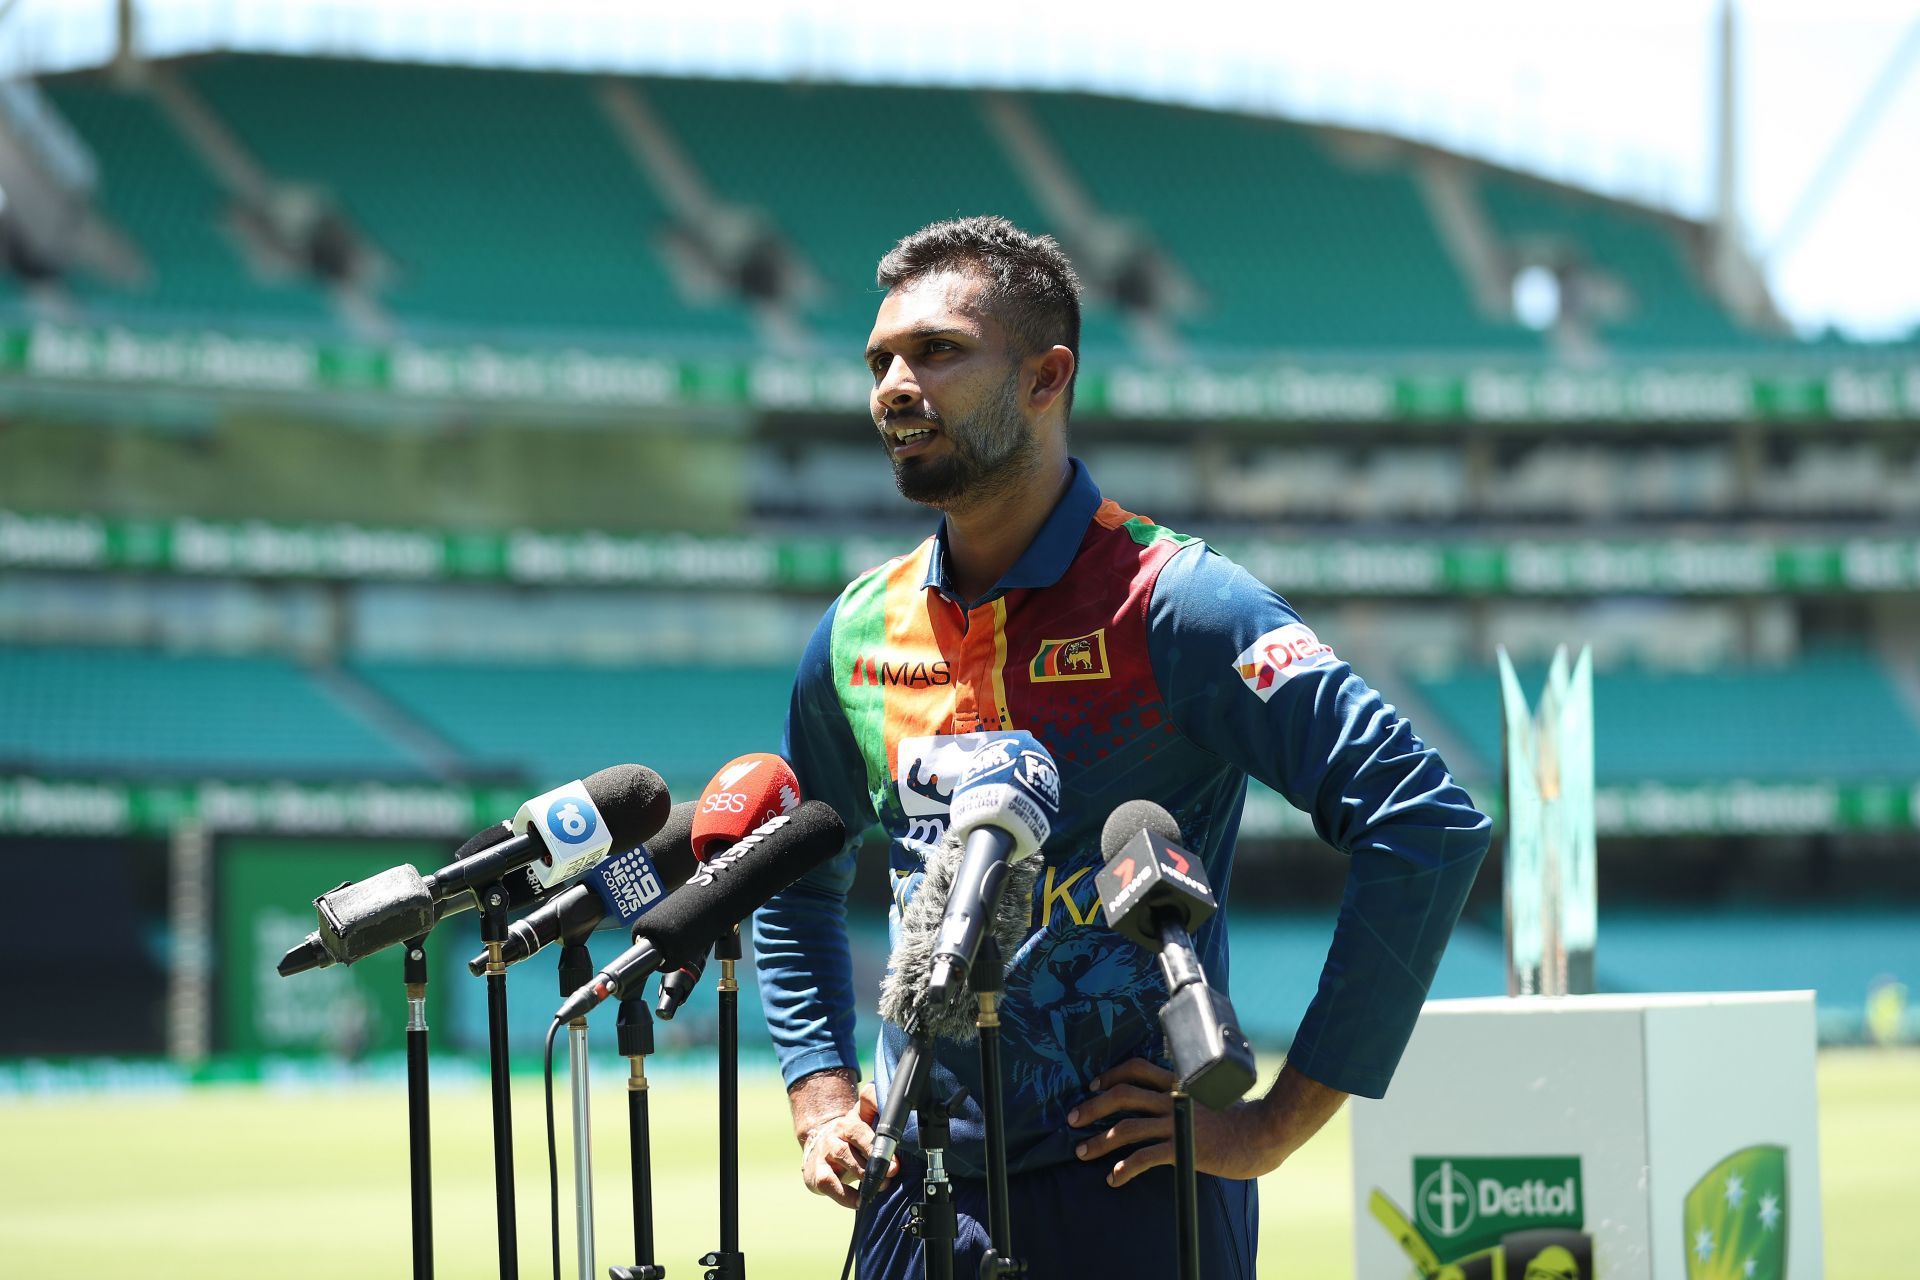 Dasun Shanaka is the captain of Sri Lanka (Image Courtesy: Getty Images)